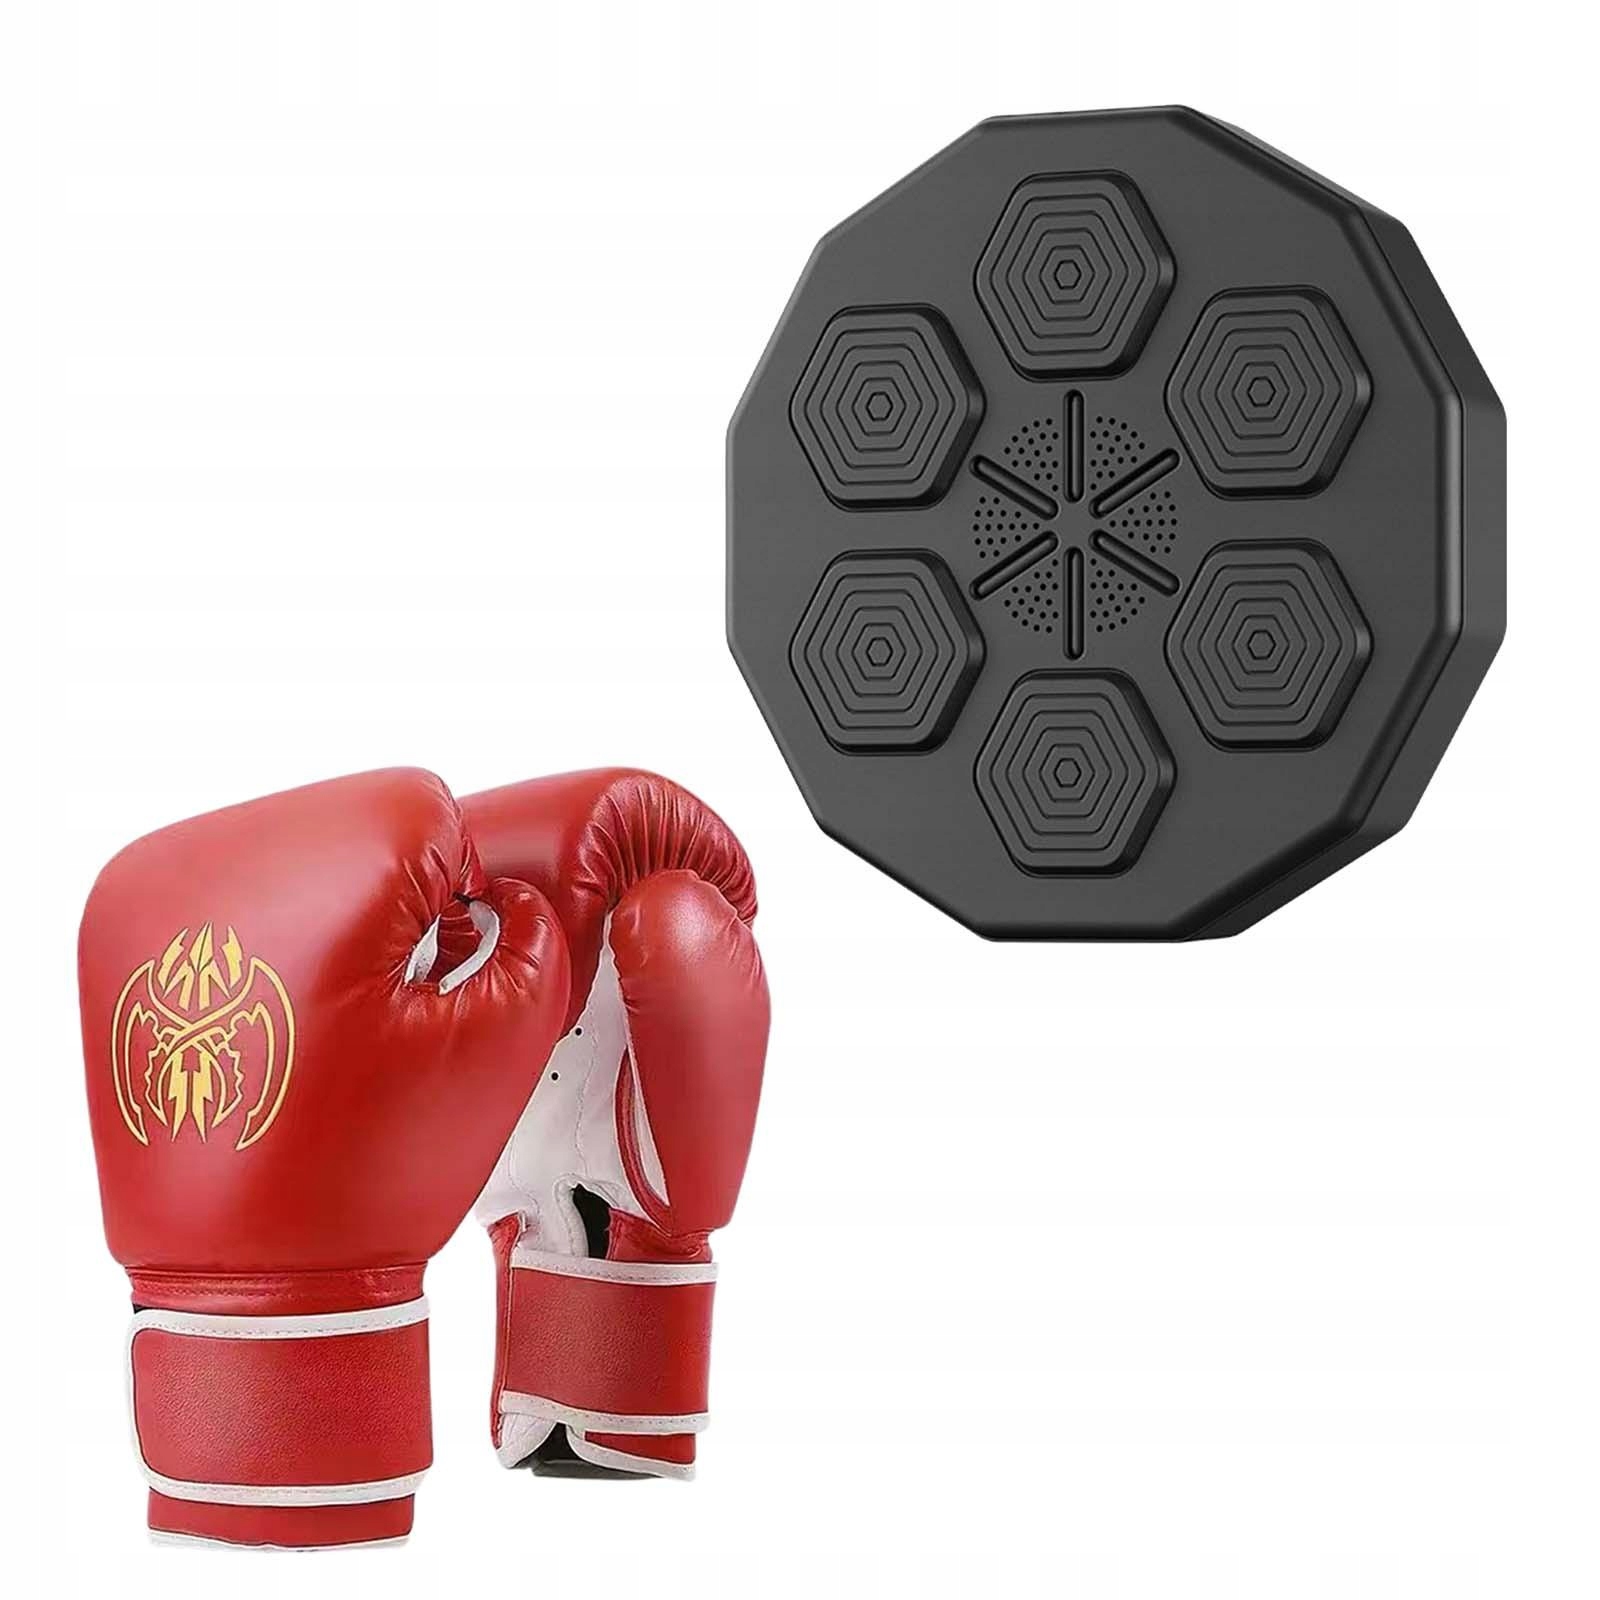 Music Boxing Machine Smart Music Boxing Red za 3445 Kč - Allegro